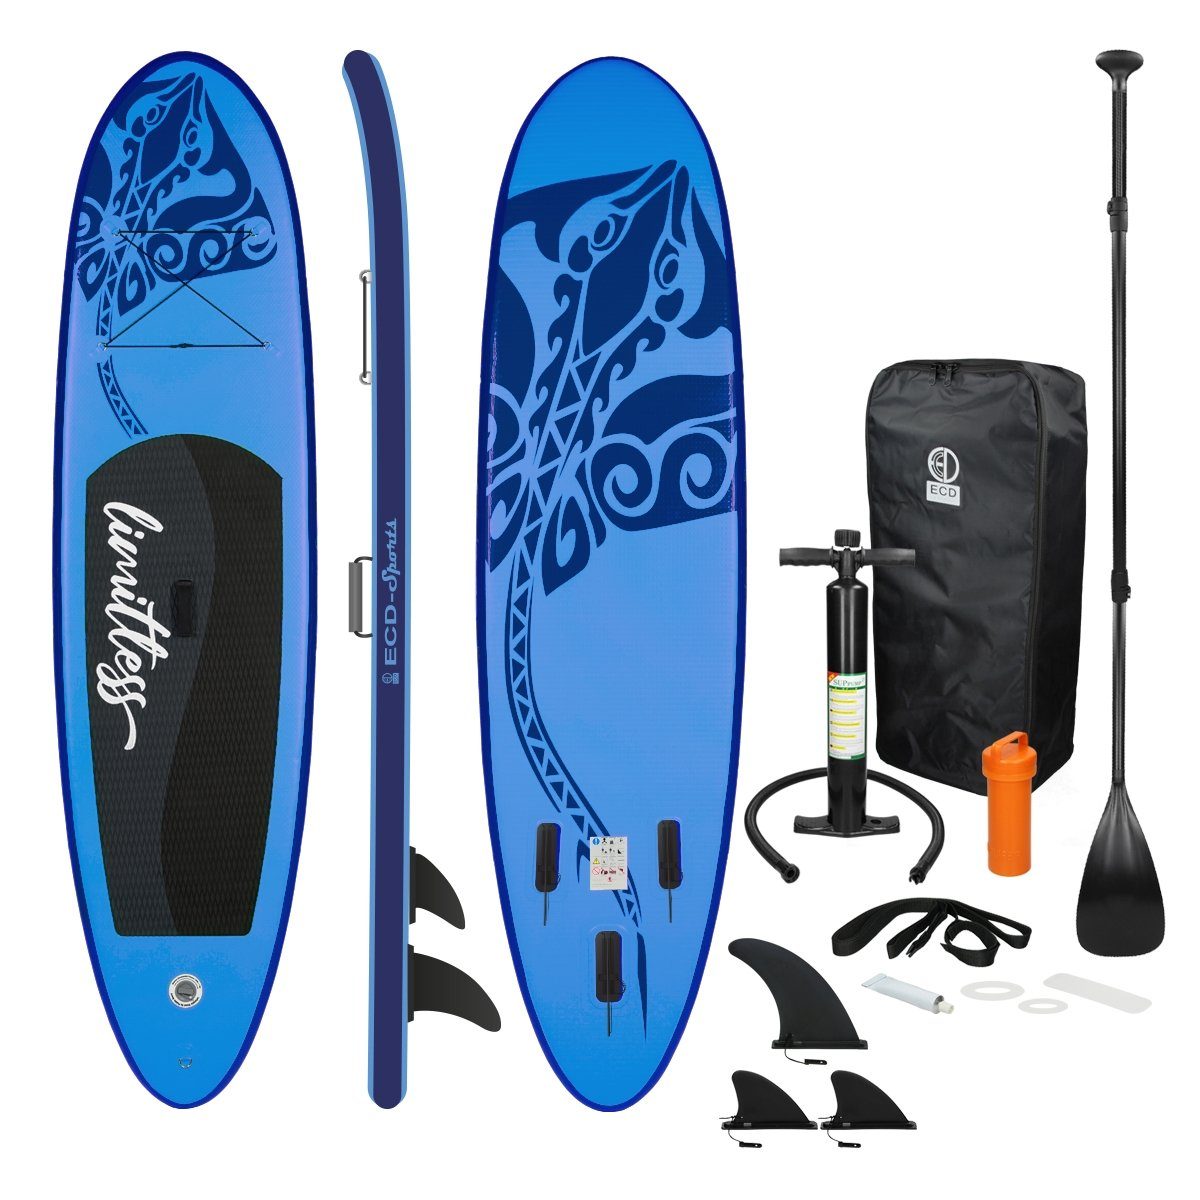 ECD Germany SUP-Board Aufblasbares Stand Up Paddle Board Limitless Paddelboard Surfboard, Blau 308x76x10cm PVC bis 120kg Tragetasche Zubehör Komplett Set